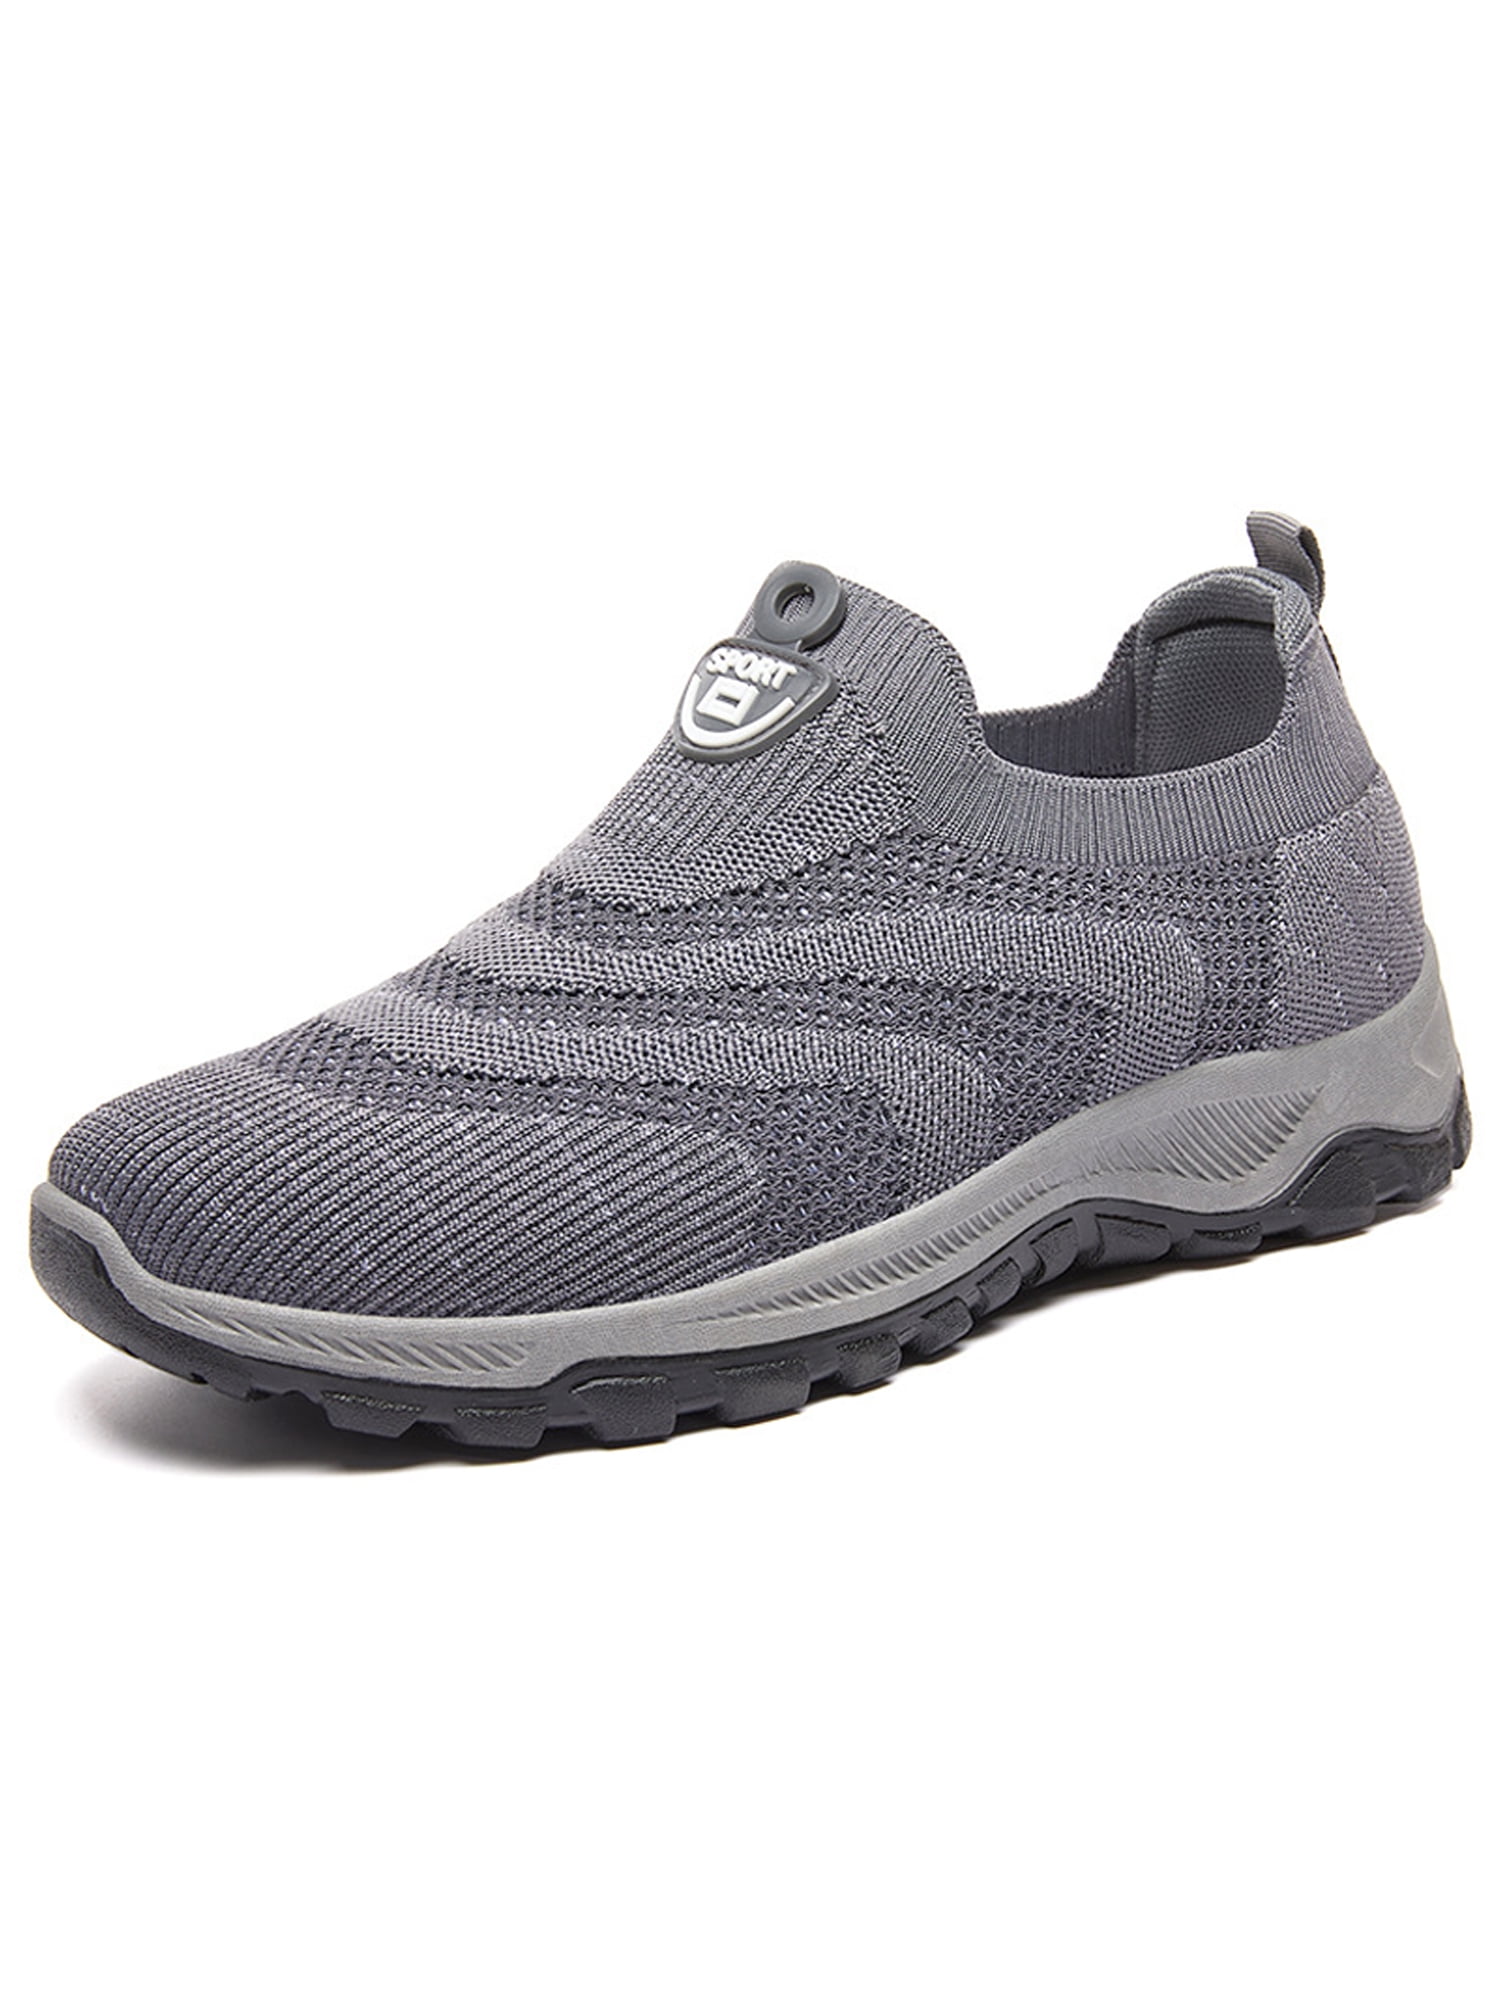 Ymiytan Mens Slip-on Athletic Walking Shoes Gray 7.5 - Walmart.com